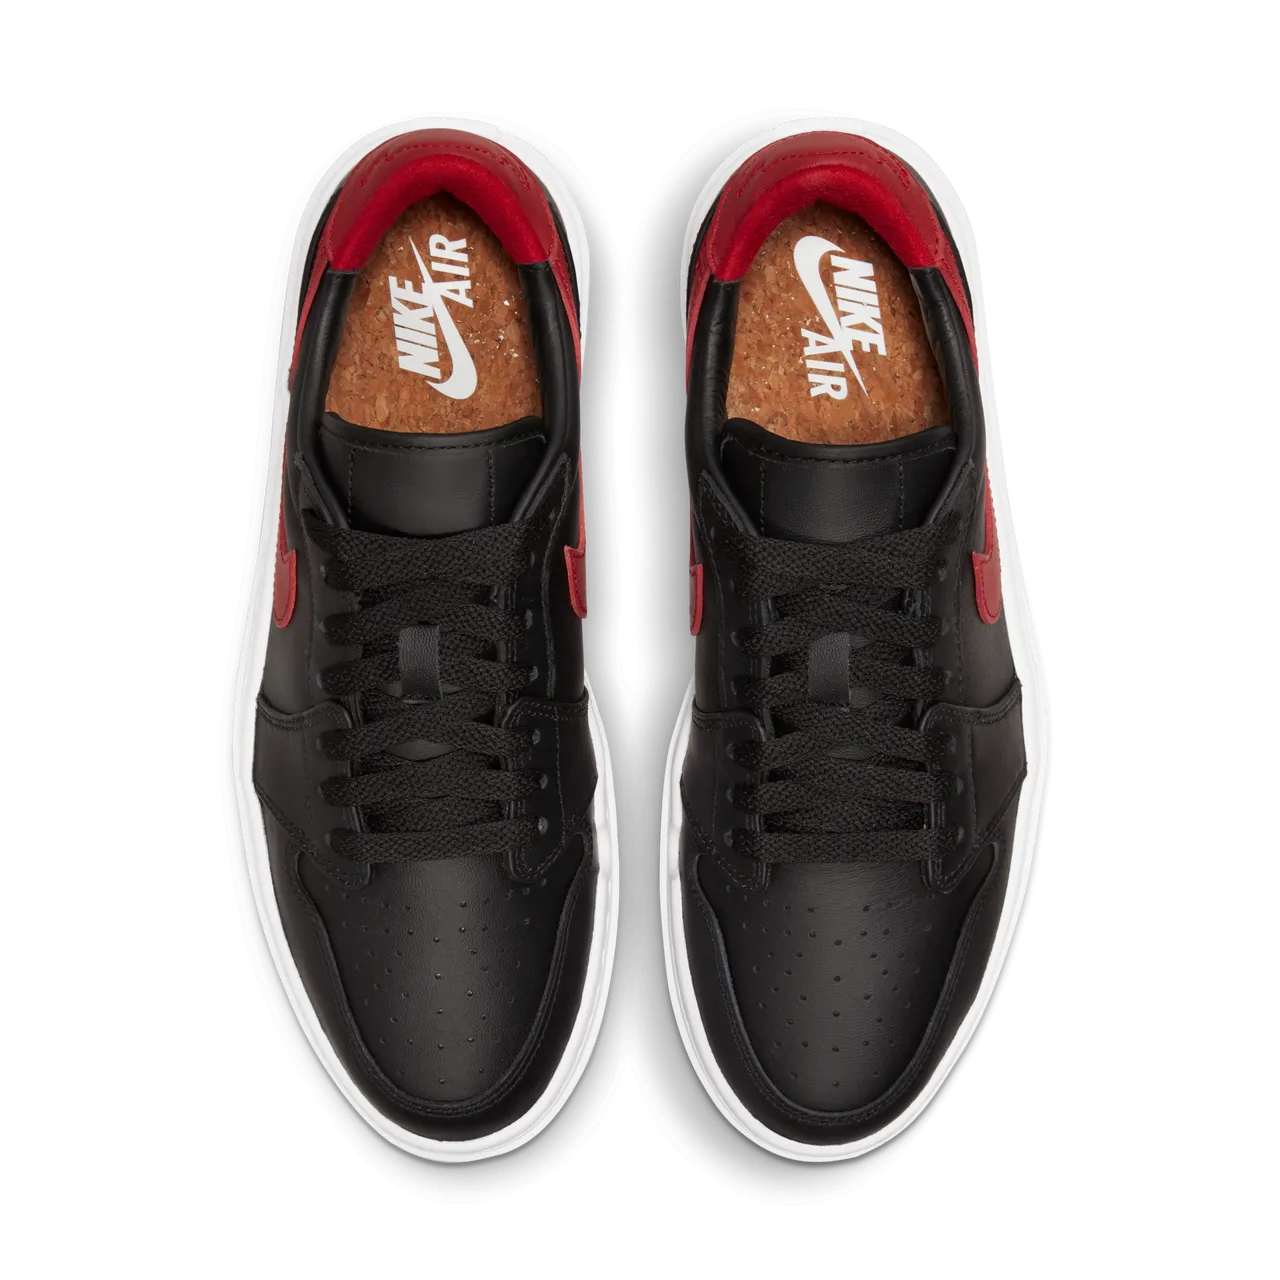 Air Jordan 1 Elevate Low Women's Shoes - Black - Leather